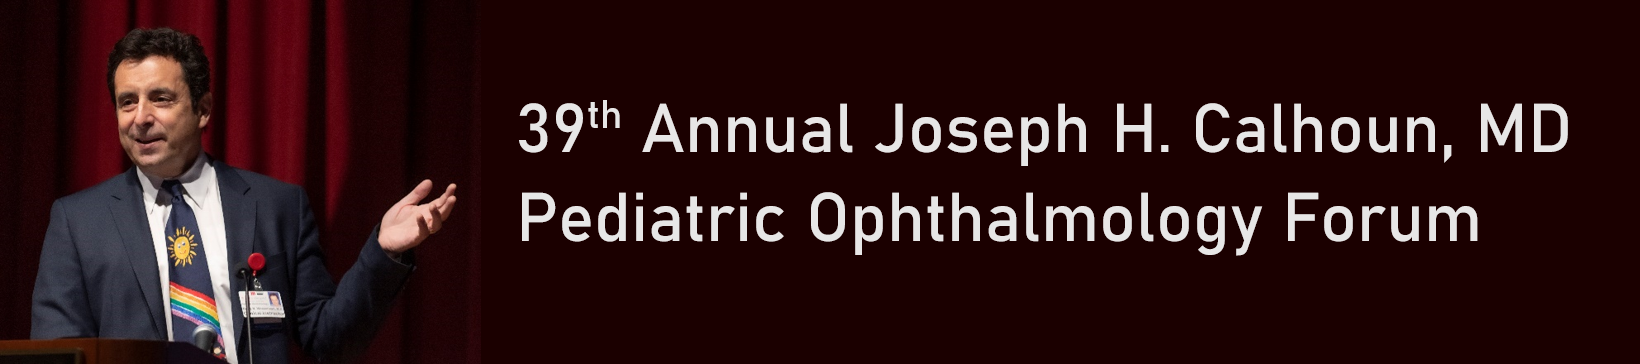 OnDemand 39th Annual Joseph H. Calhoun, MD Pediatric Ophthalmology Forum Banner